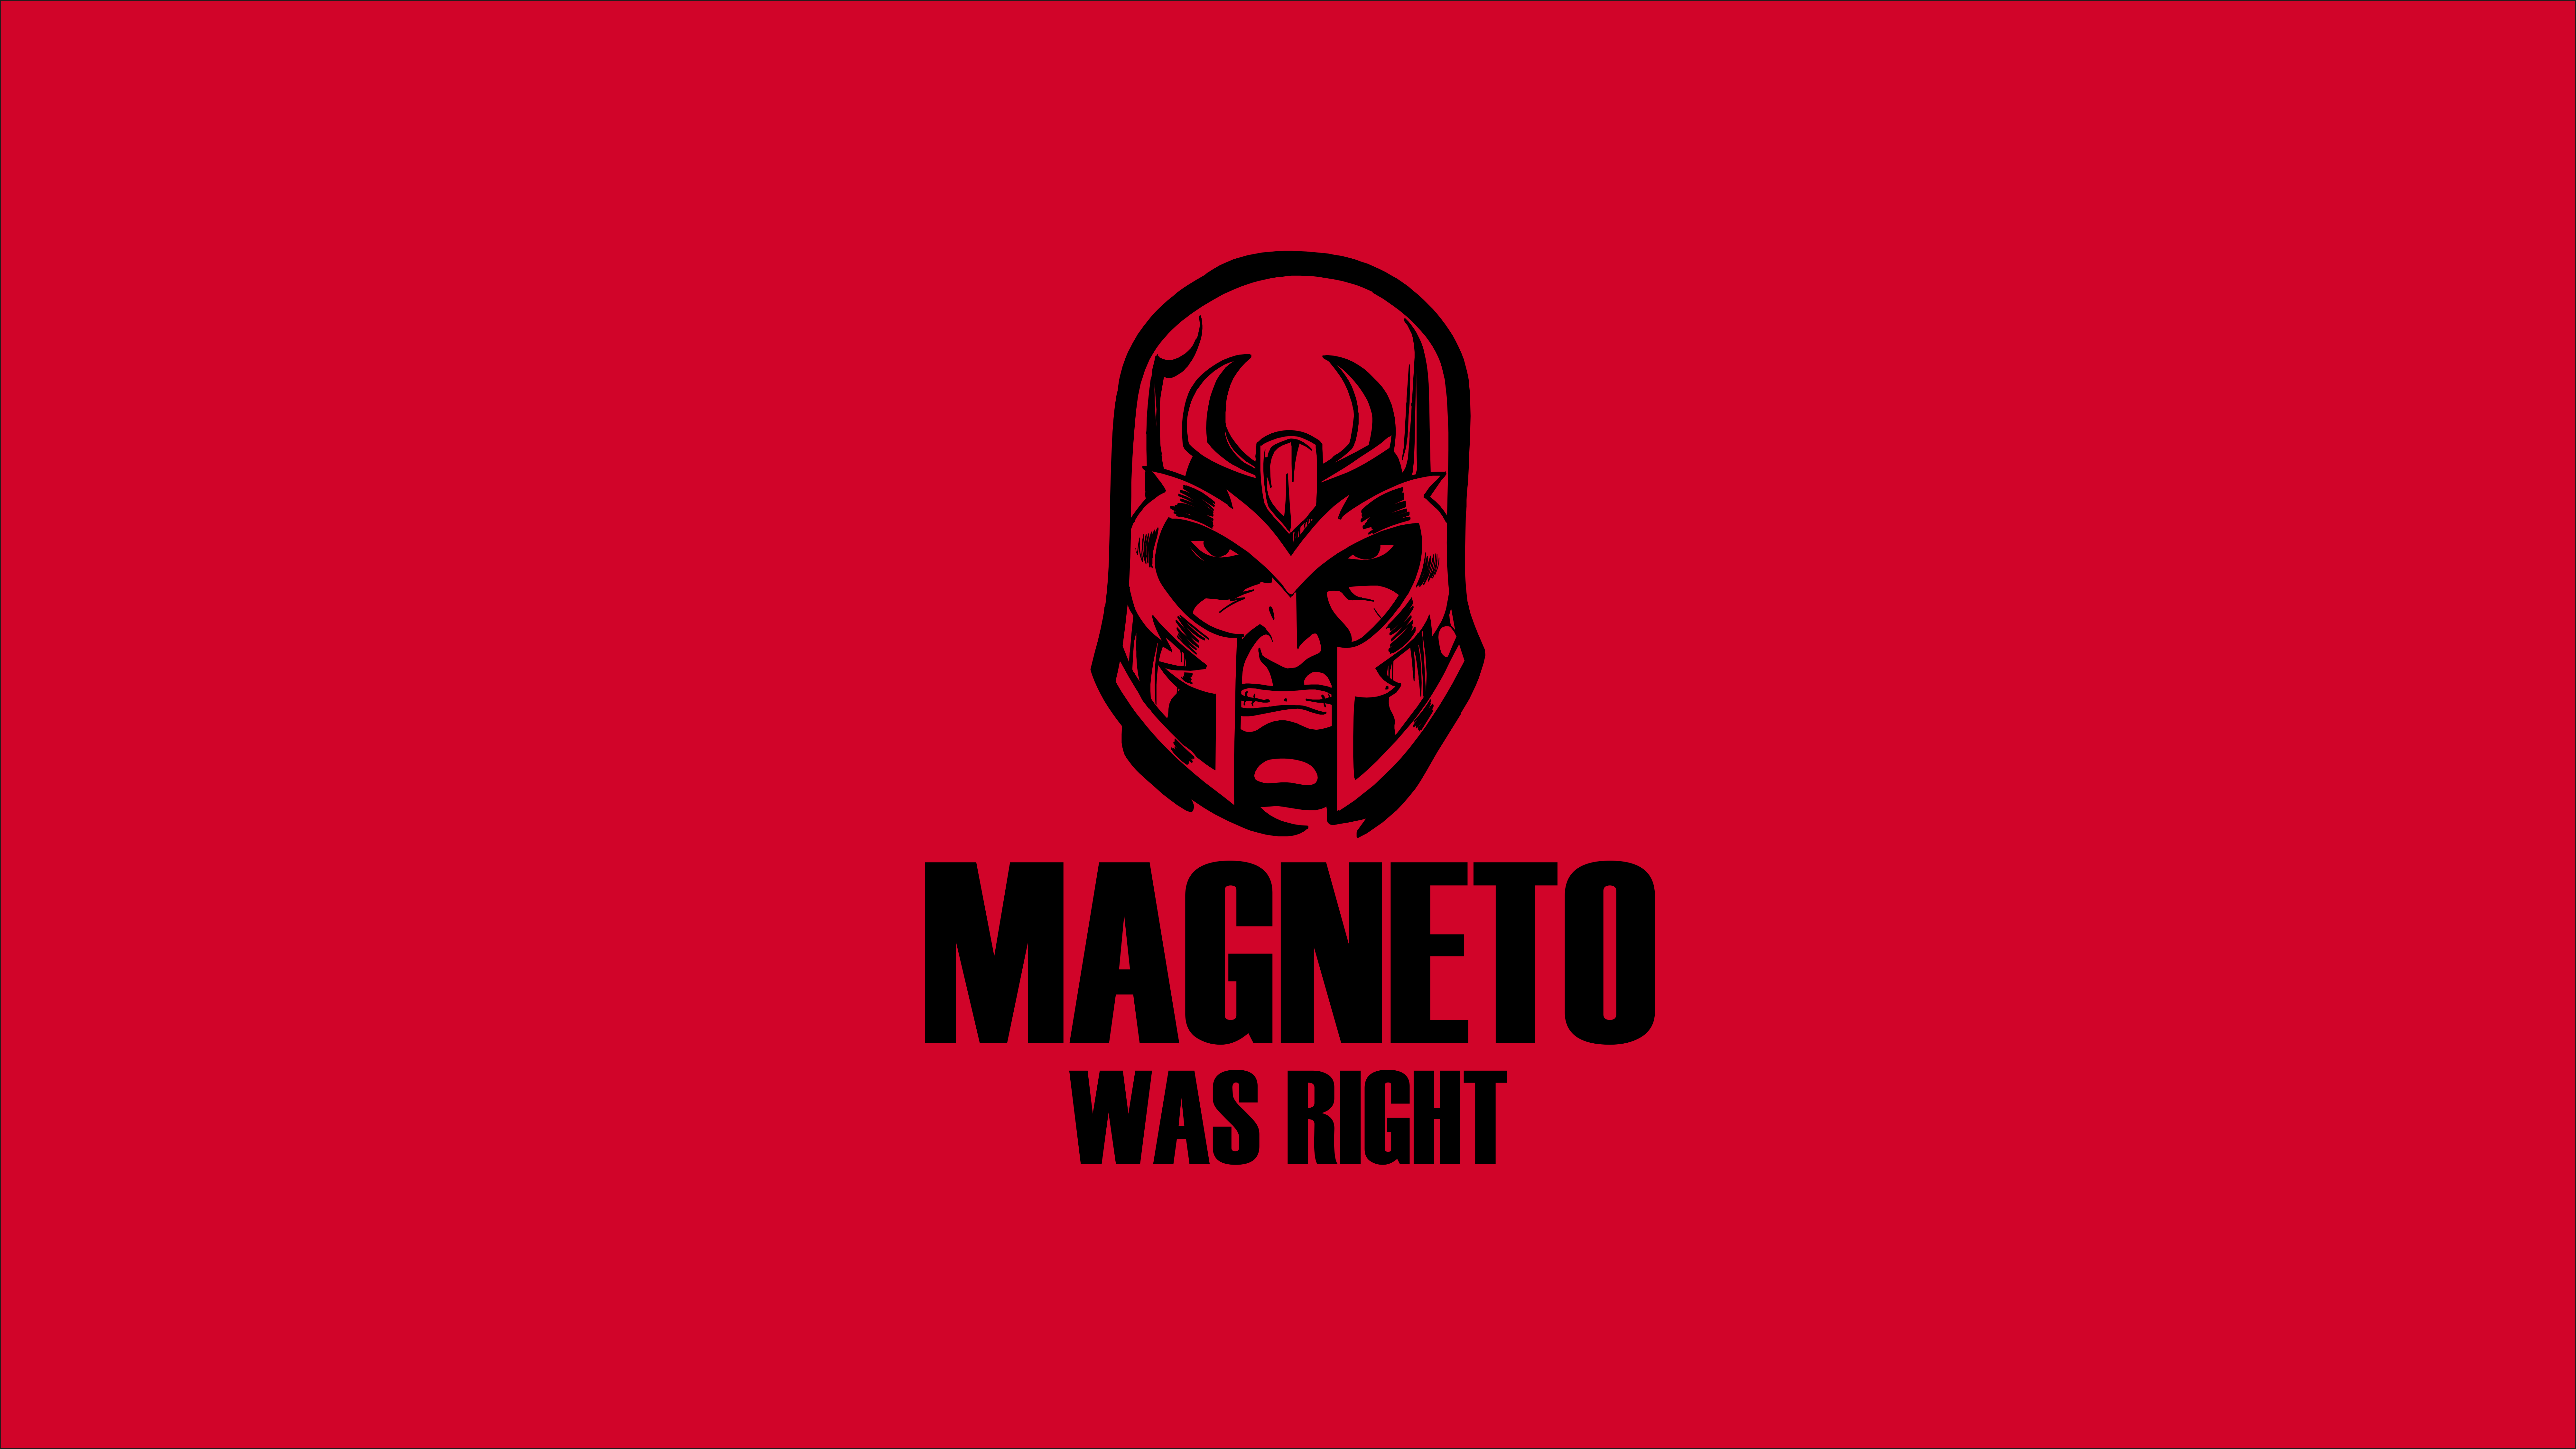 Magneto 8k Ultra HD Wallpaper | Background Image | 8005x4504